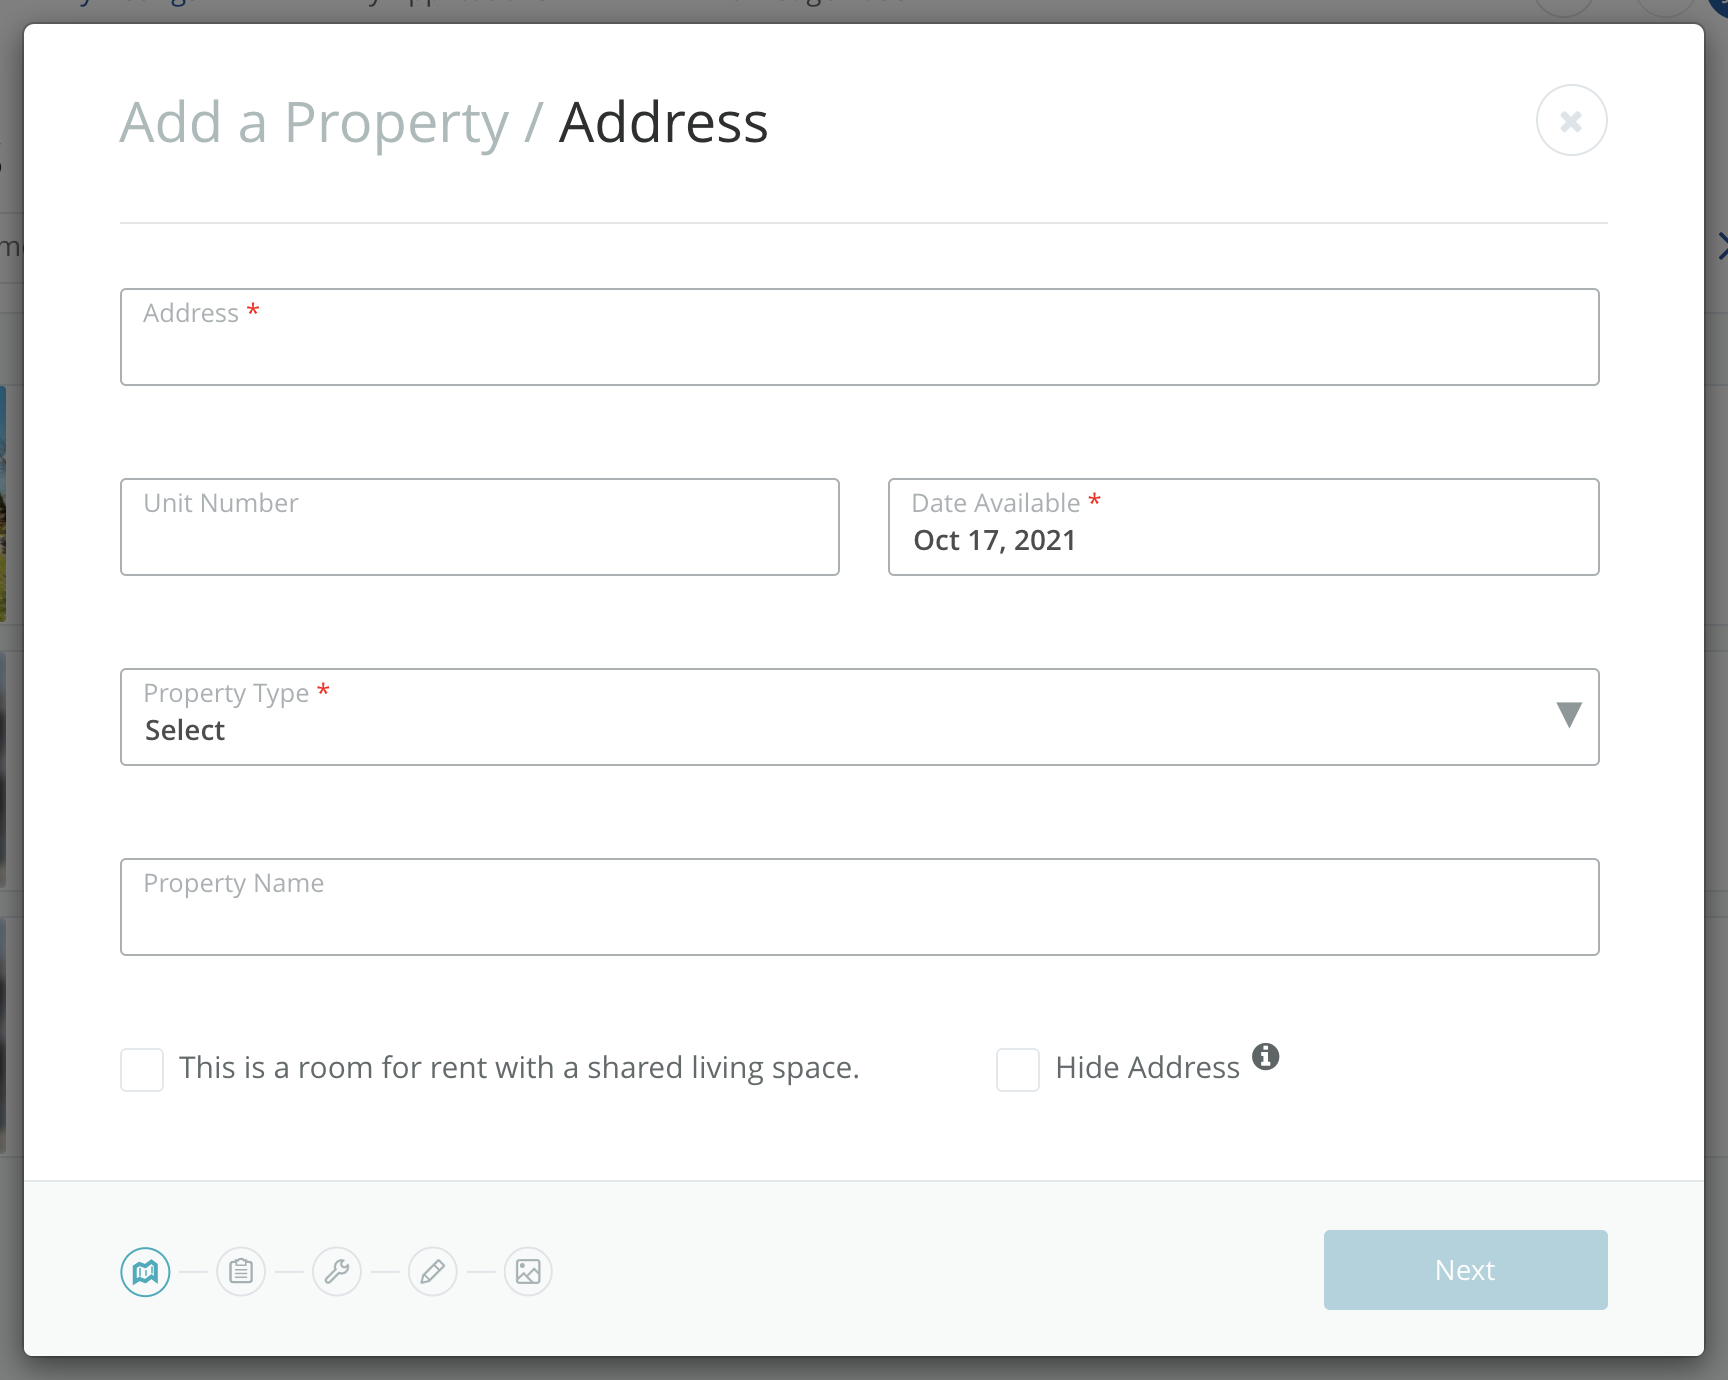 Add_a_Property_1_Address.png